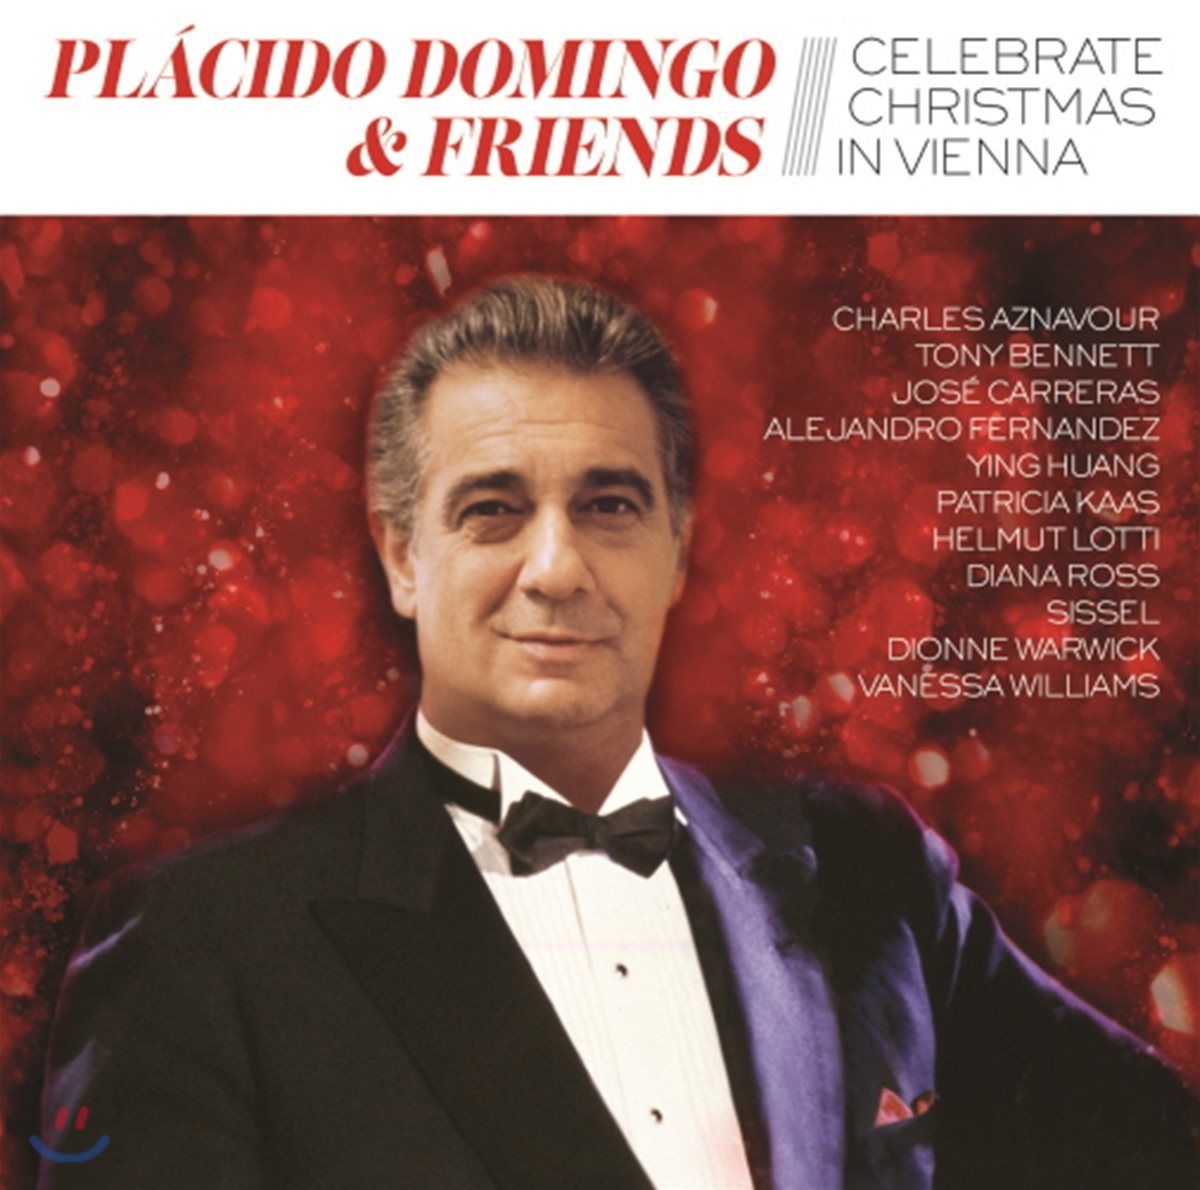 Placido Domingo &amp; Friends 플라시도 도밍고 &amp; 친구들 - 크리스마스 앨범 (Celebrate Christmas in Vienna)